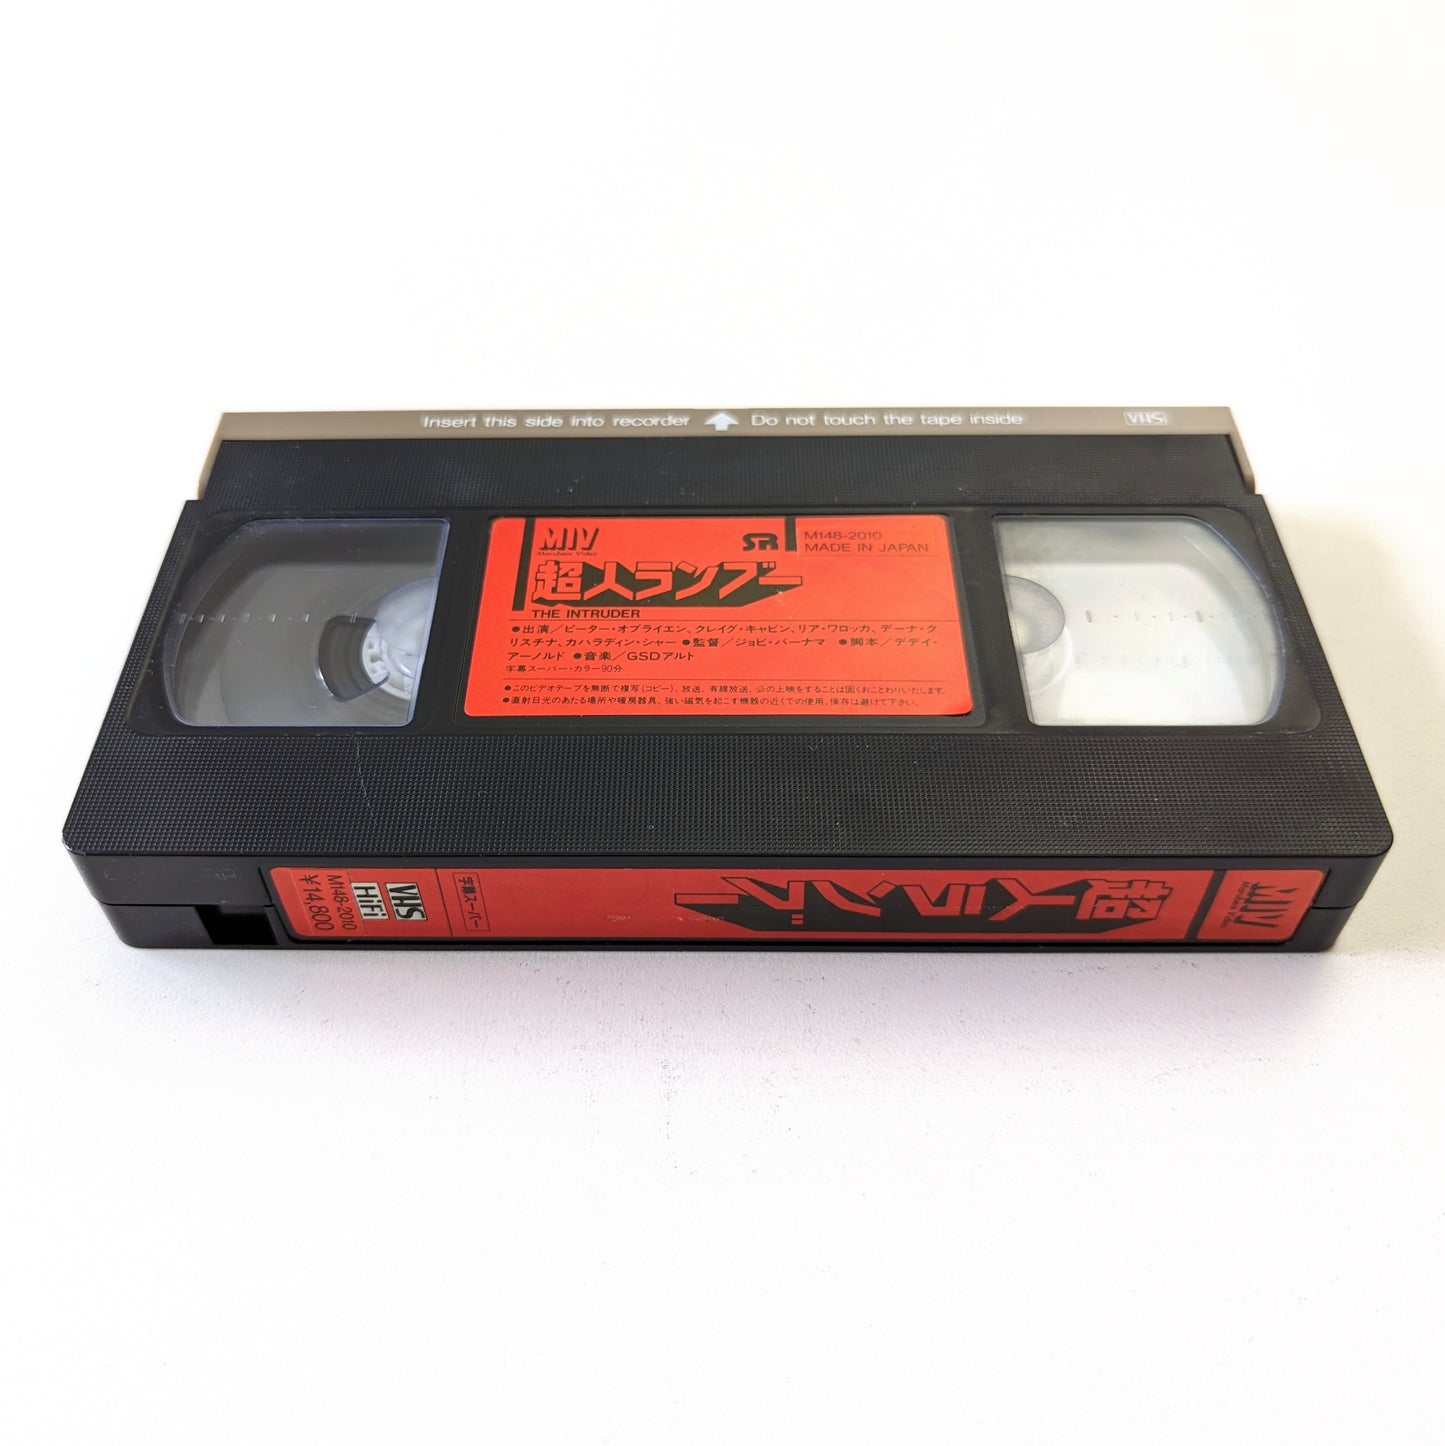 Intruder, The (1985) Japanese VHS